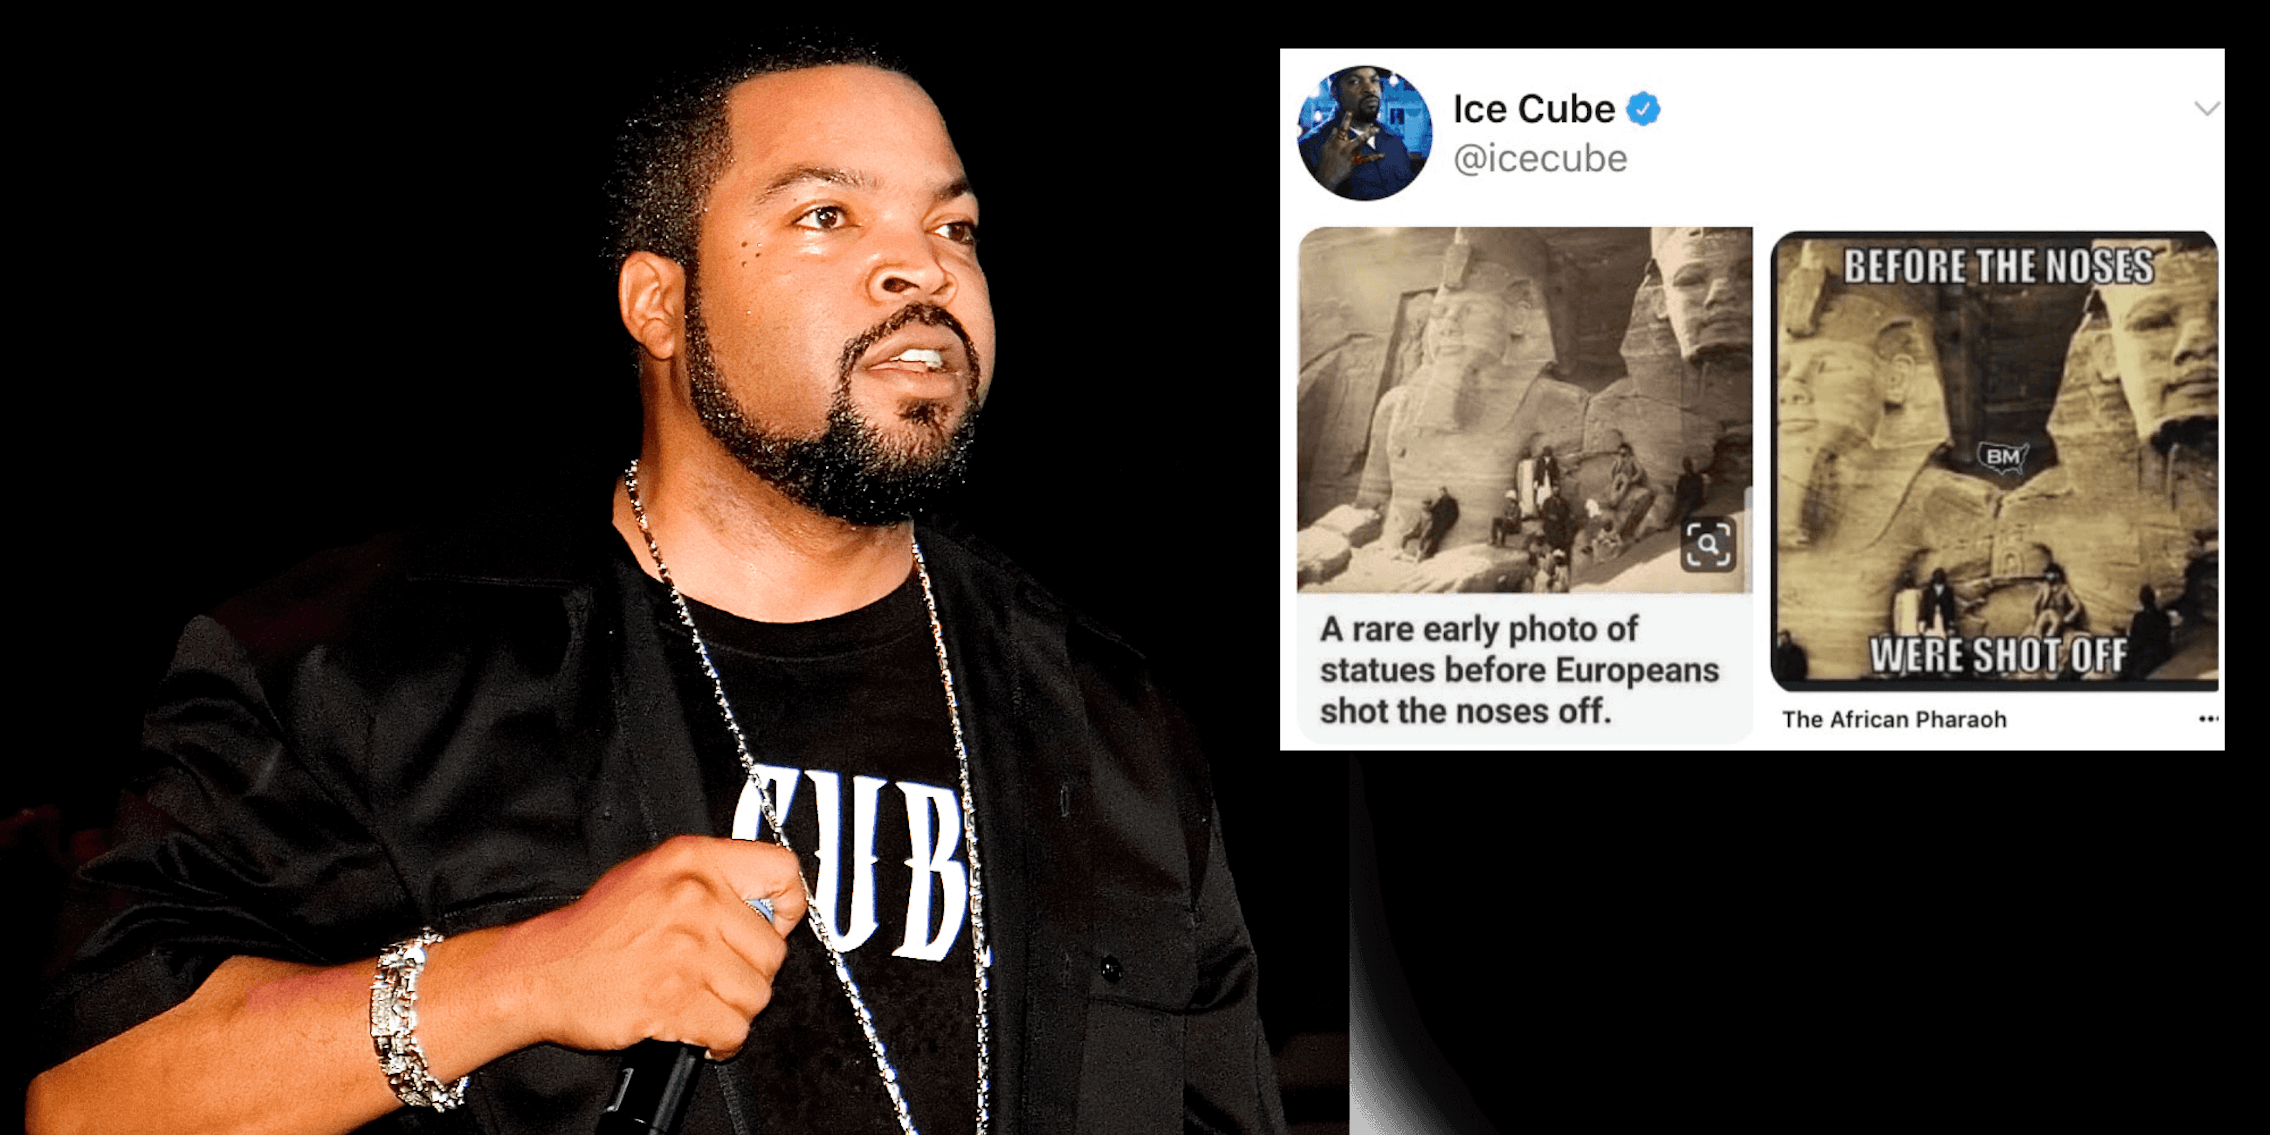 Ice Cube next to a tweet including Russian propaganda